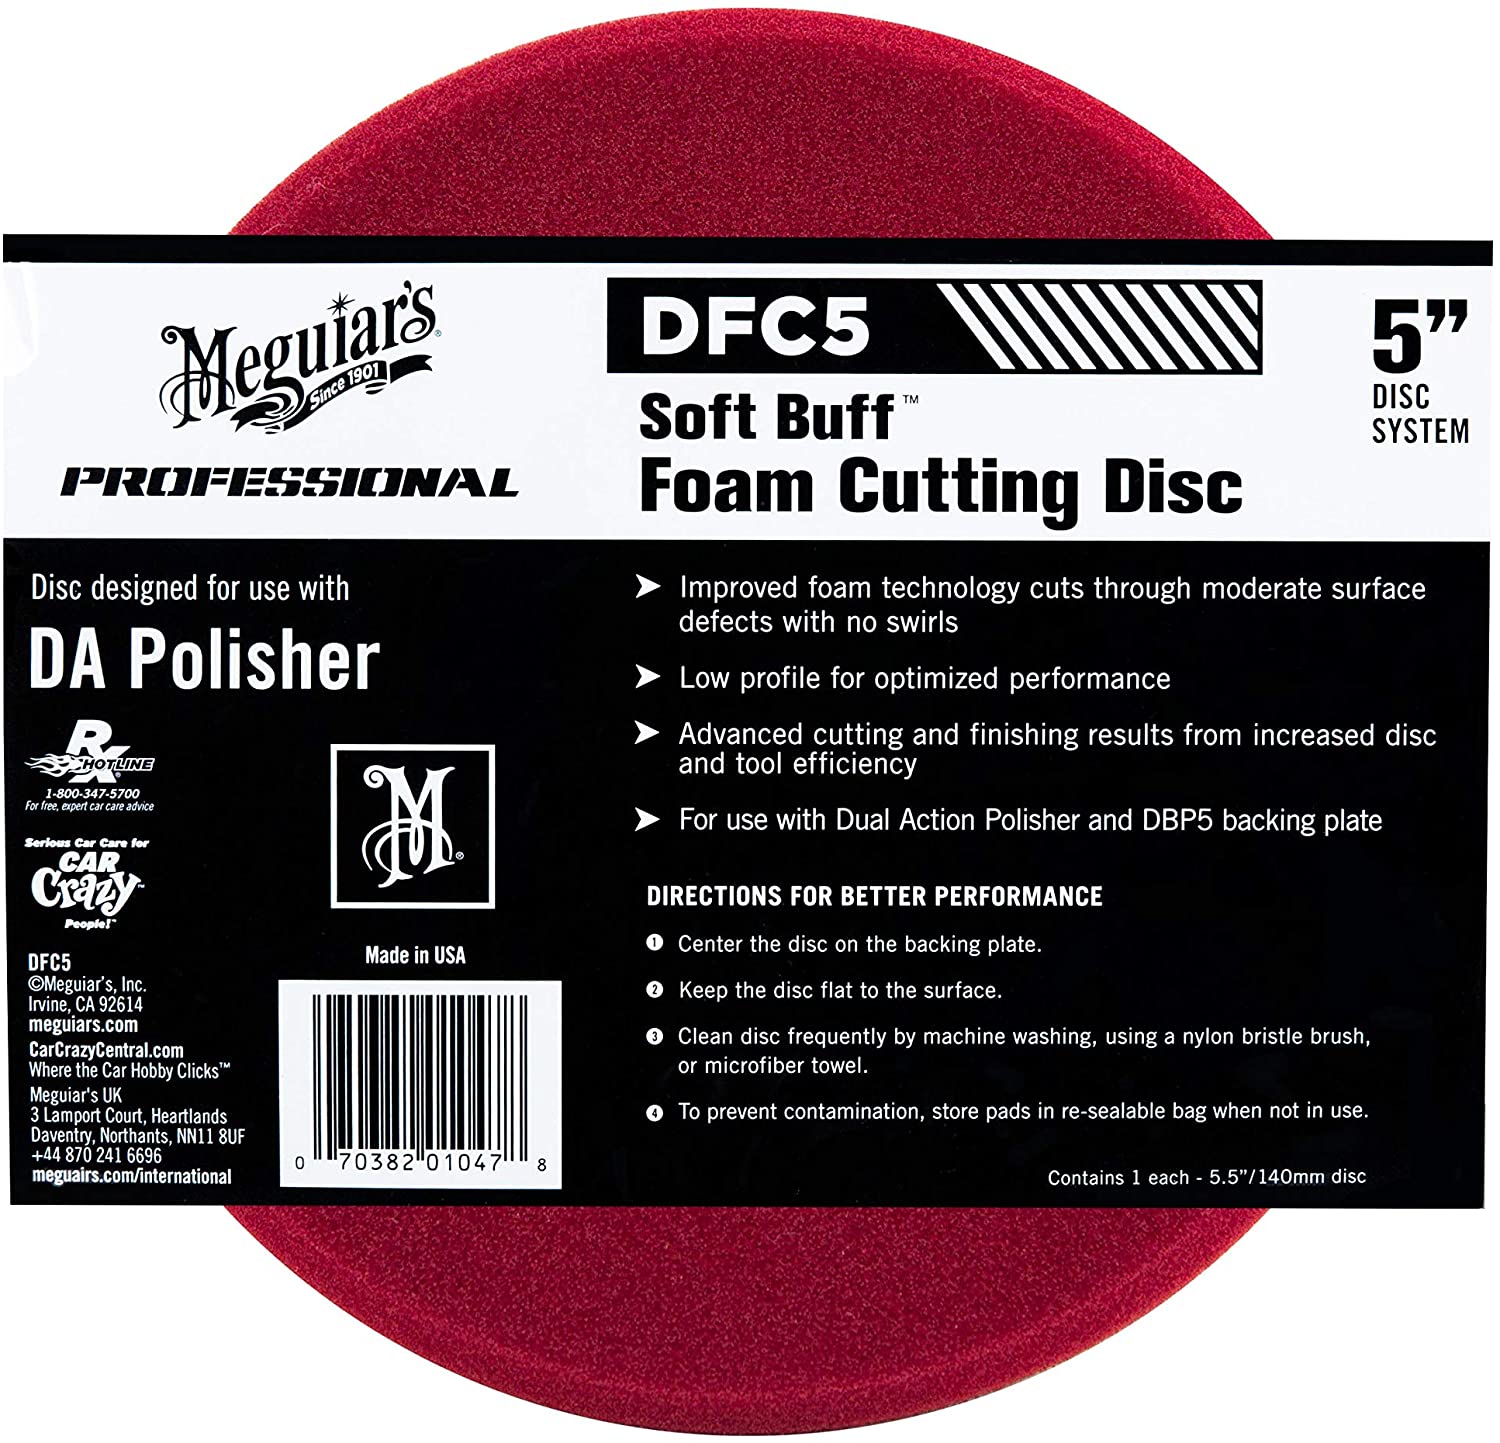 Bonete de esponja Da Foam Cutting disc 5 (DFC5) Meguiar’s